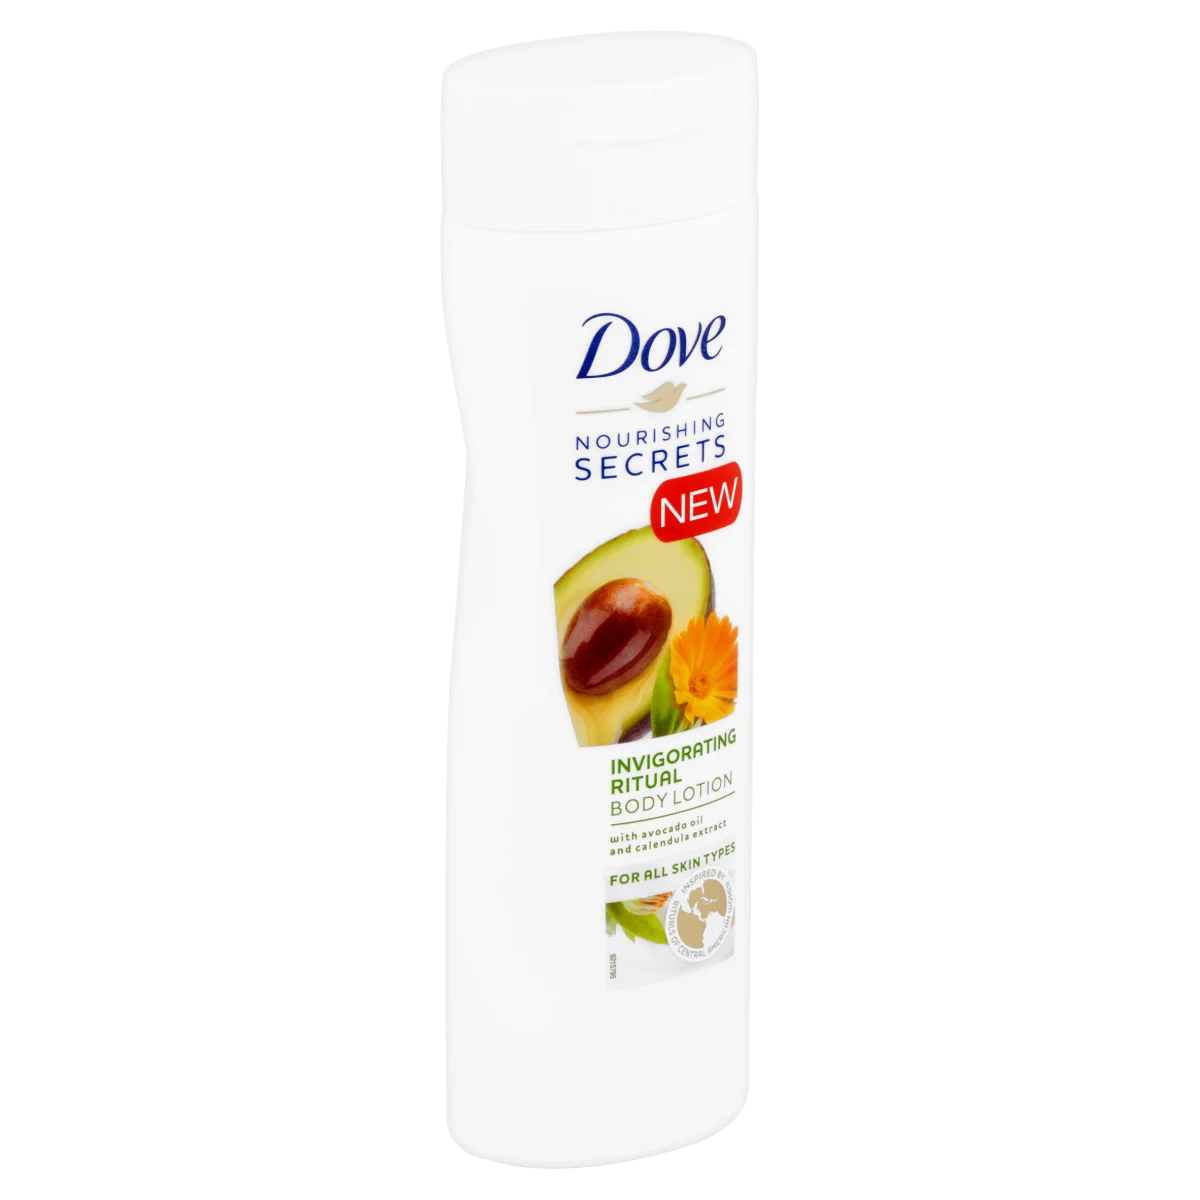 Dove Nourishing Secrets Invigorating Ritual testápoló minden bőrtípusra 250 ml